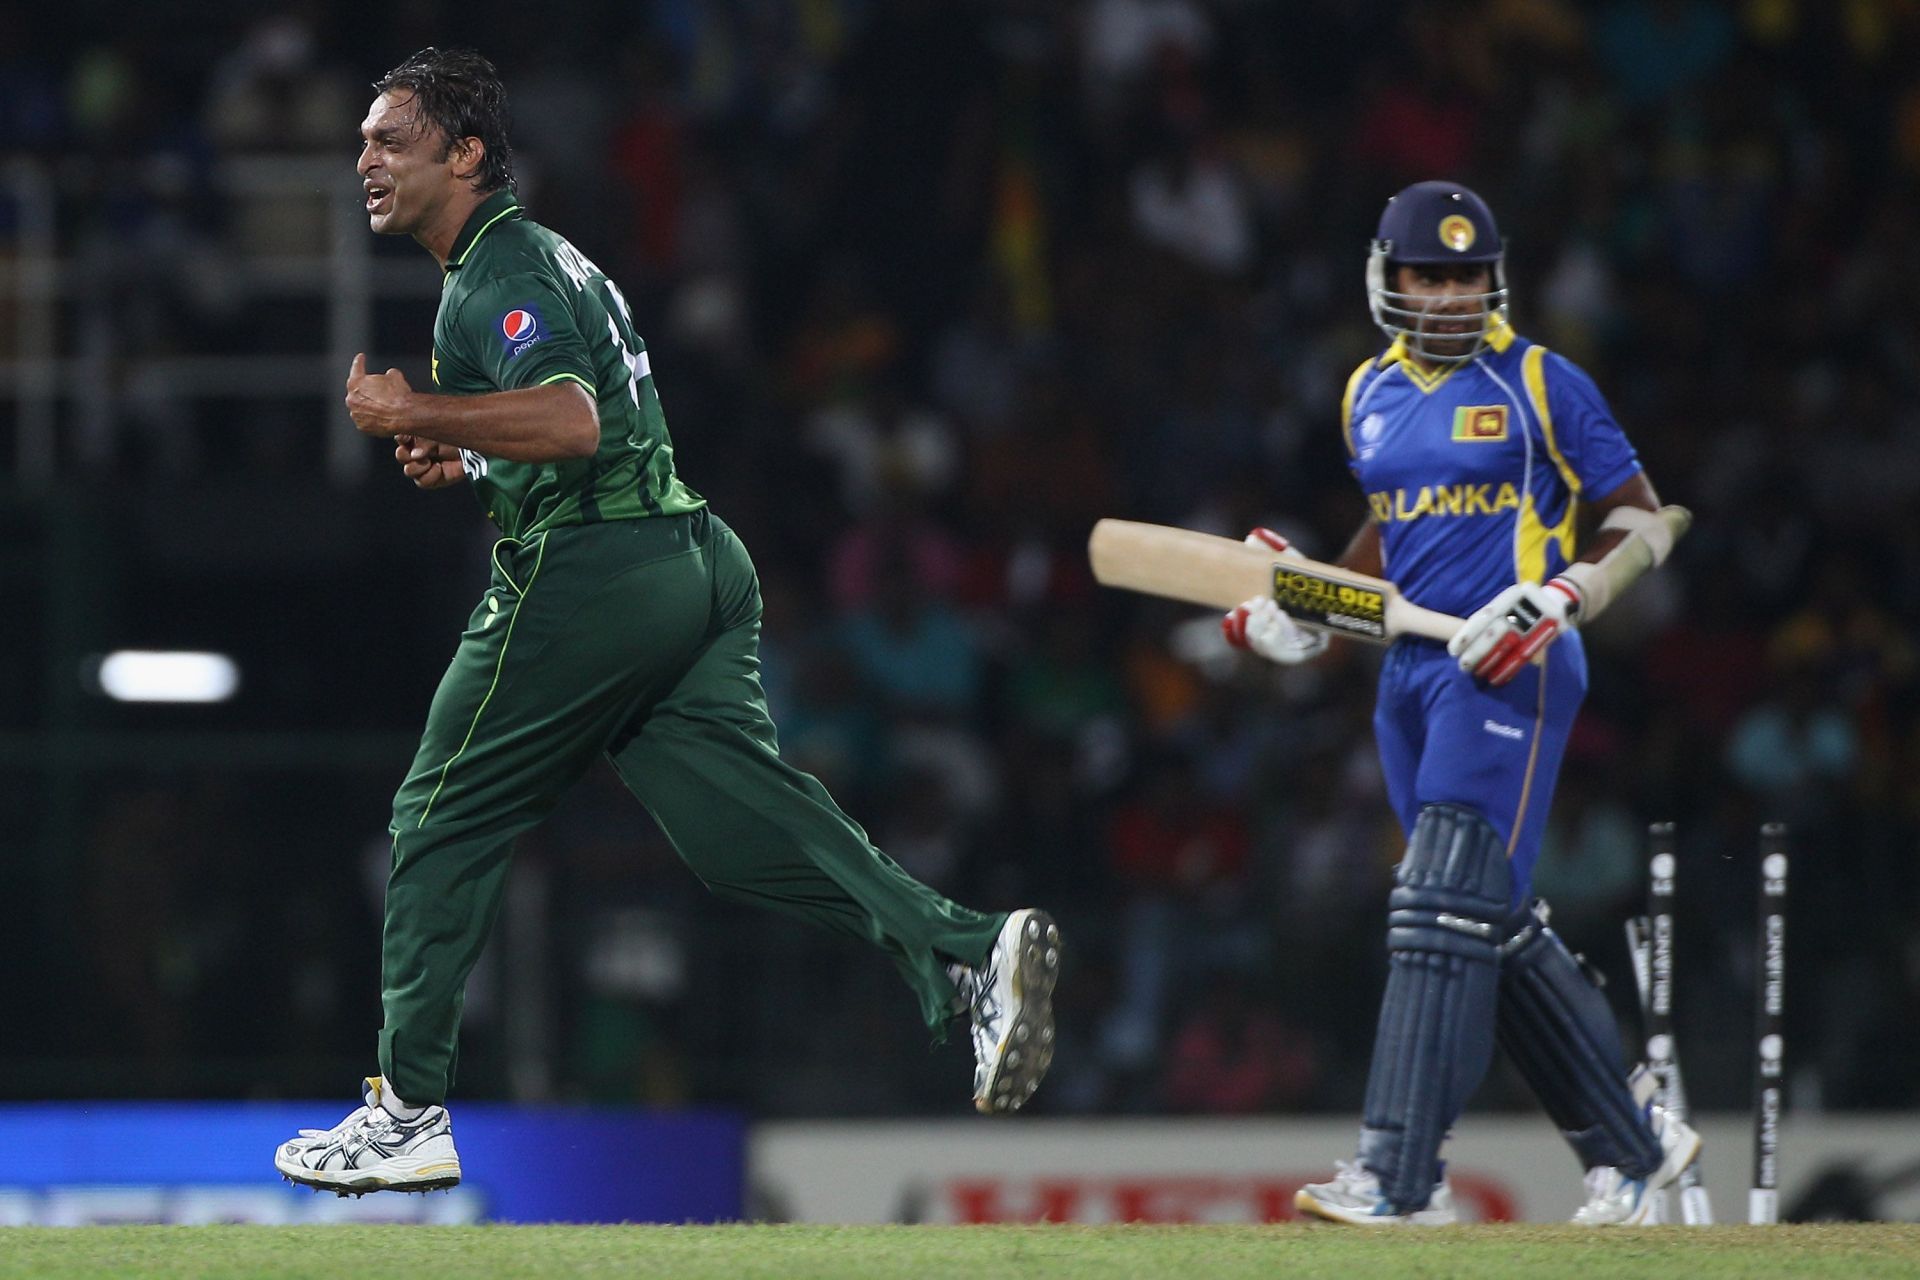 Shoaib Akhtar during the Pakistan v Sri Lanka 2011 ICC World Cup clash. Pic: Getty Images